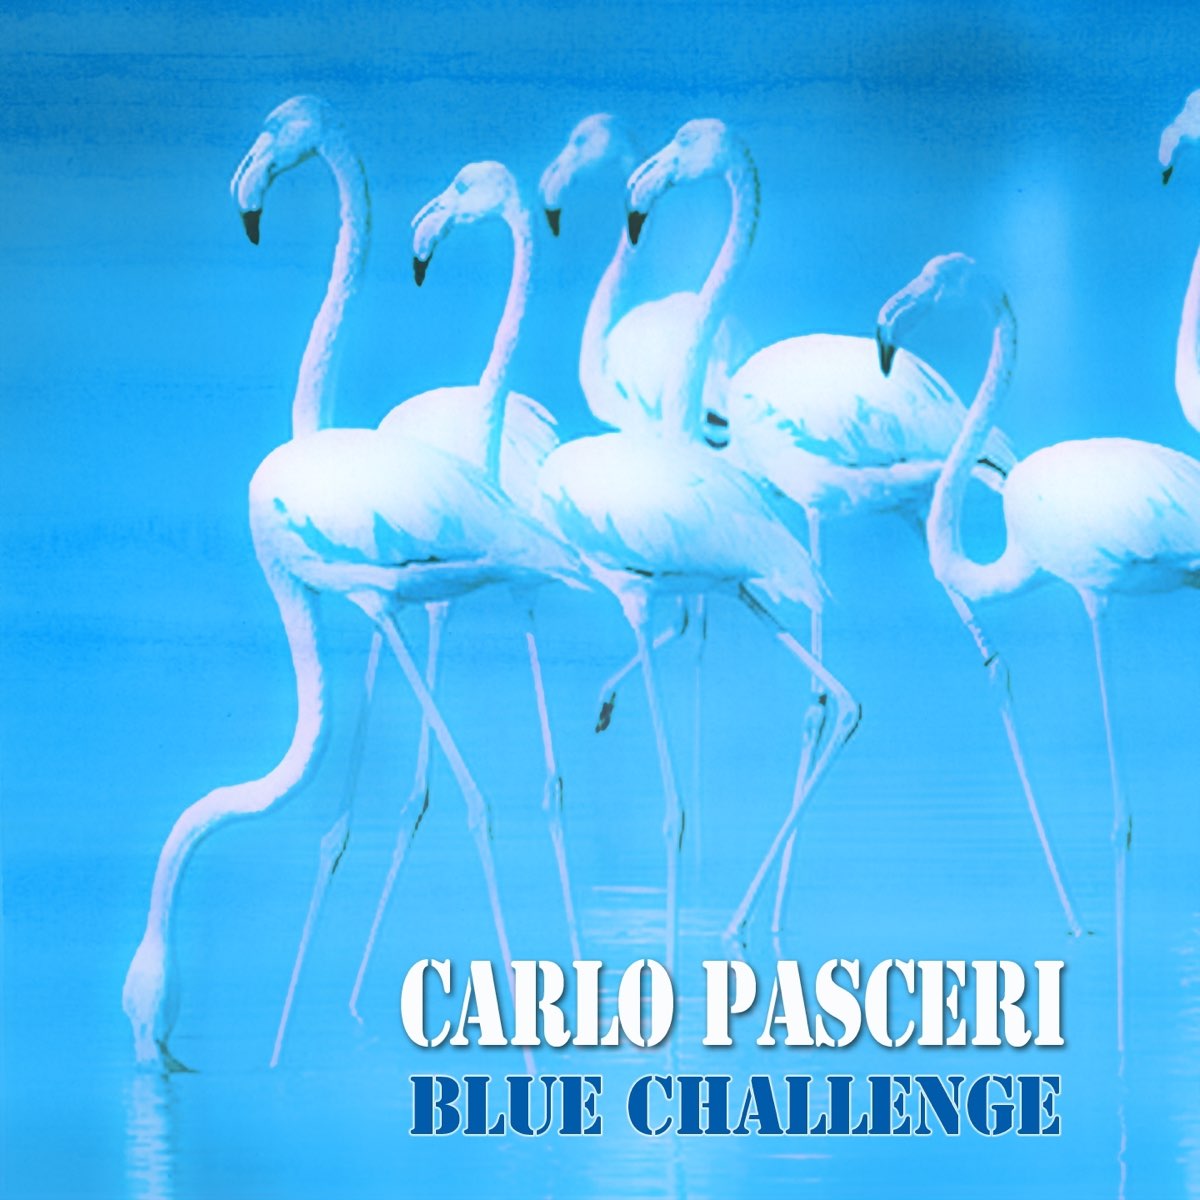 Blue Challenge. Челлендж синяя